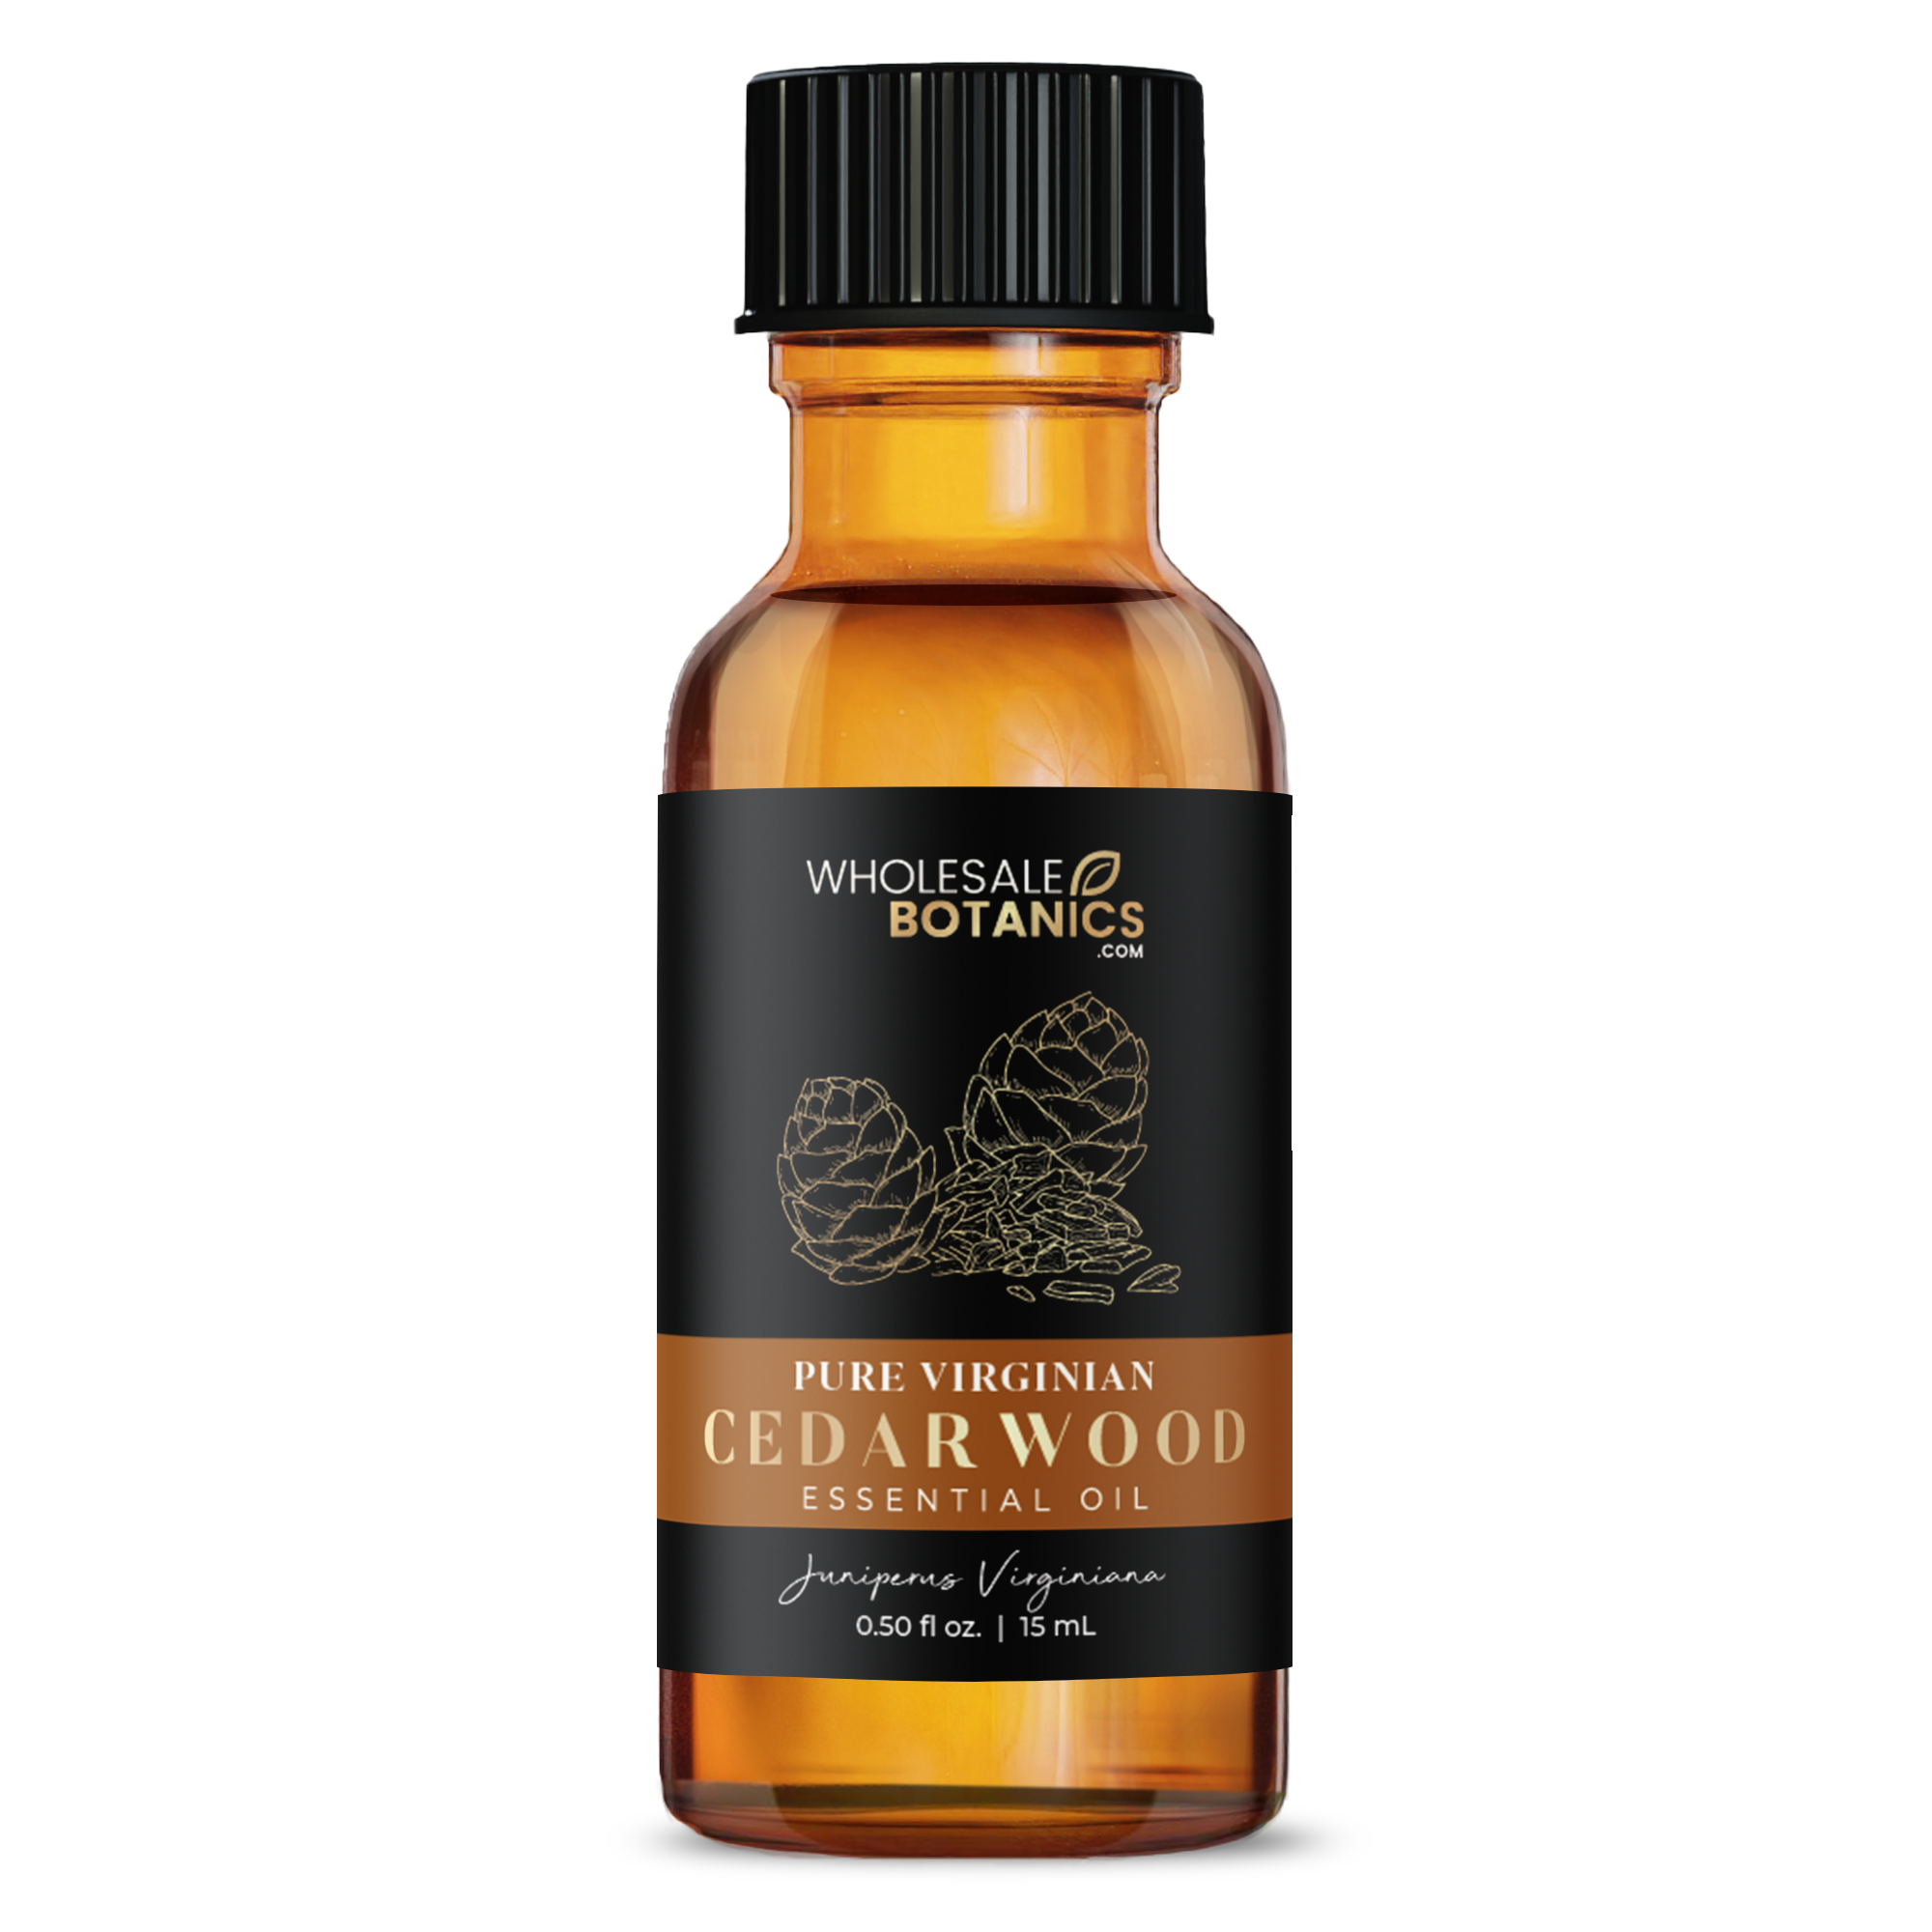 Cedarwood Essential Oil - Purity Virginian Cedarwood - .5 oz